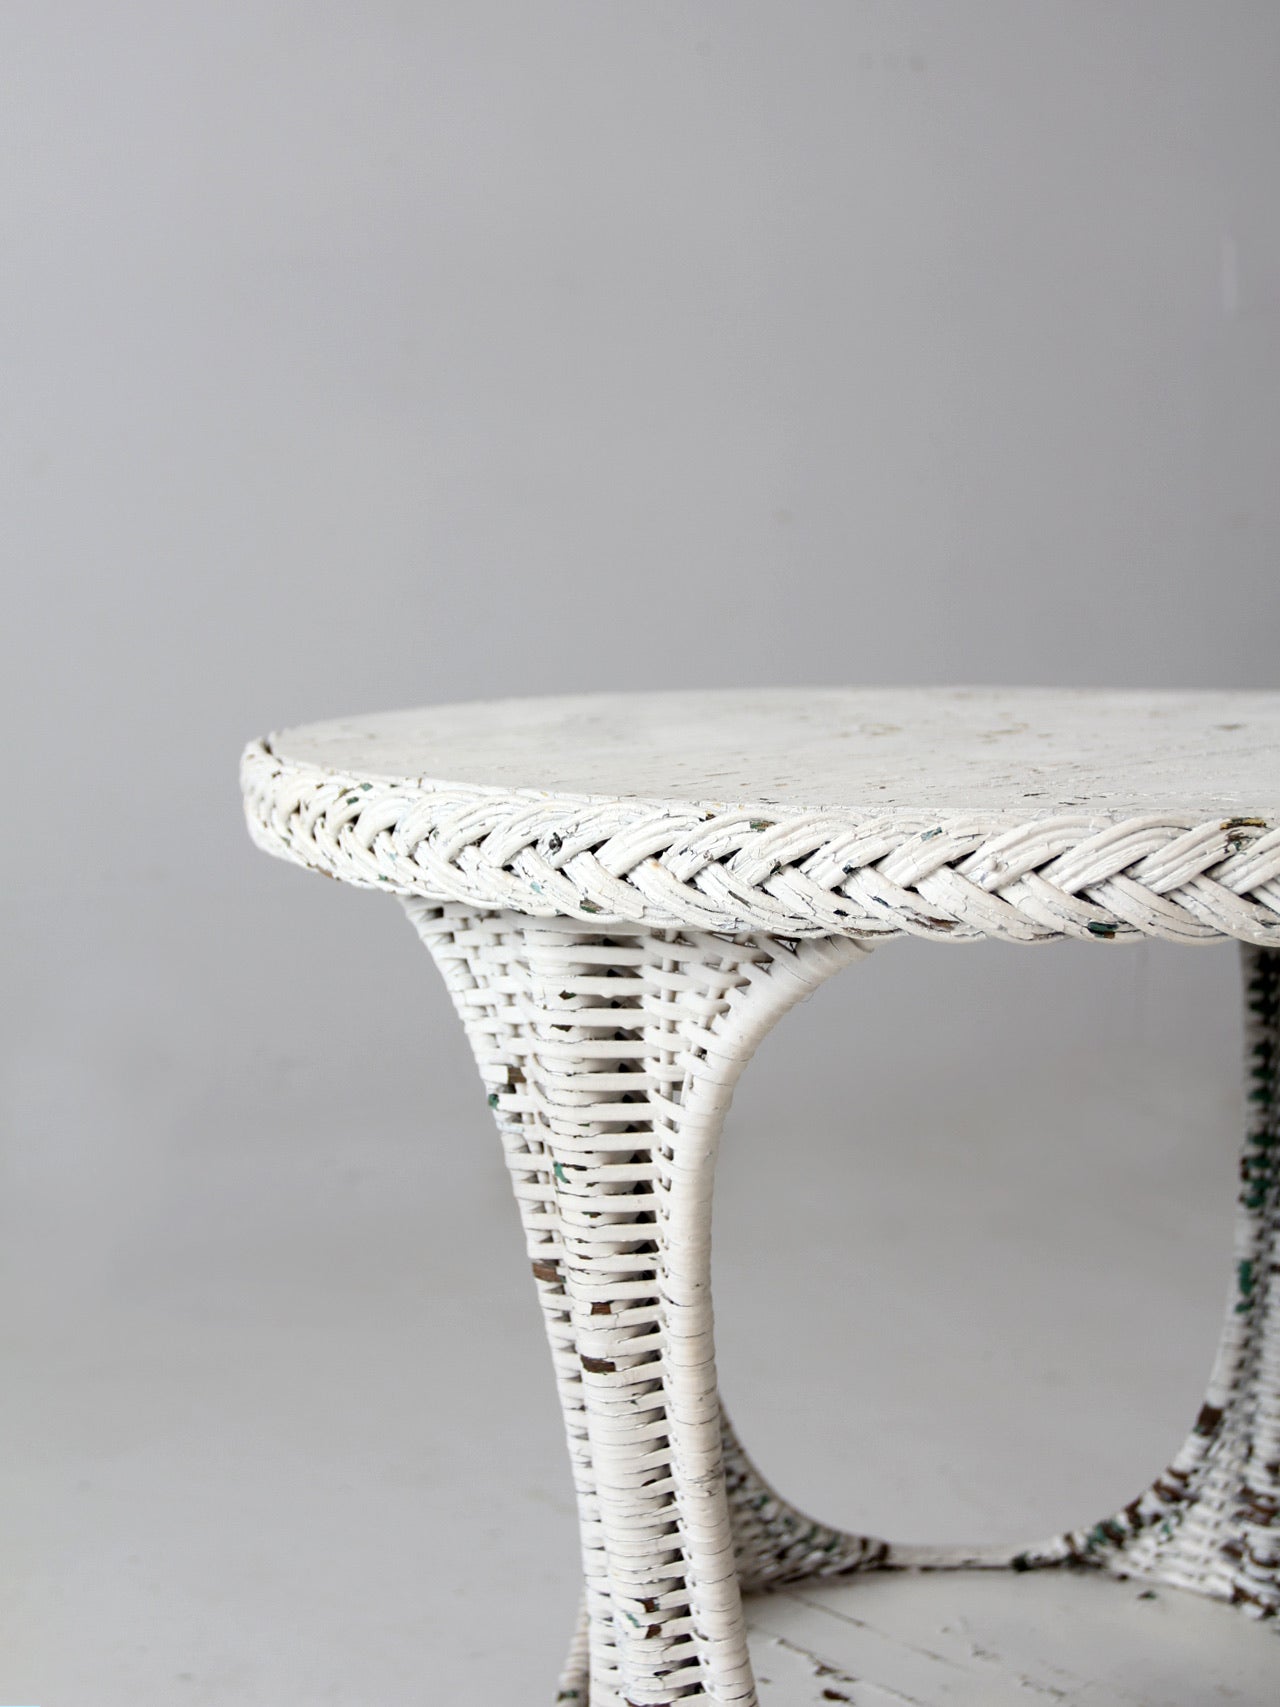 antique white wicker table